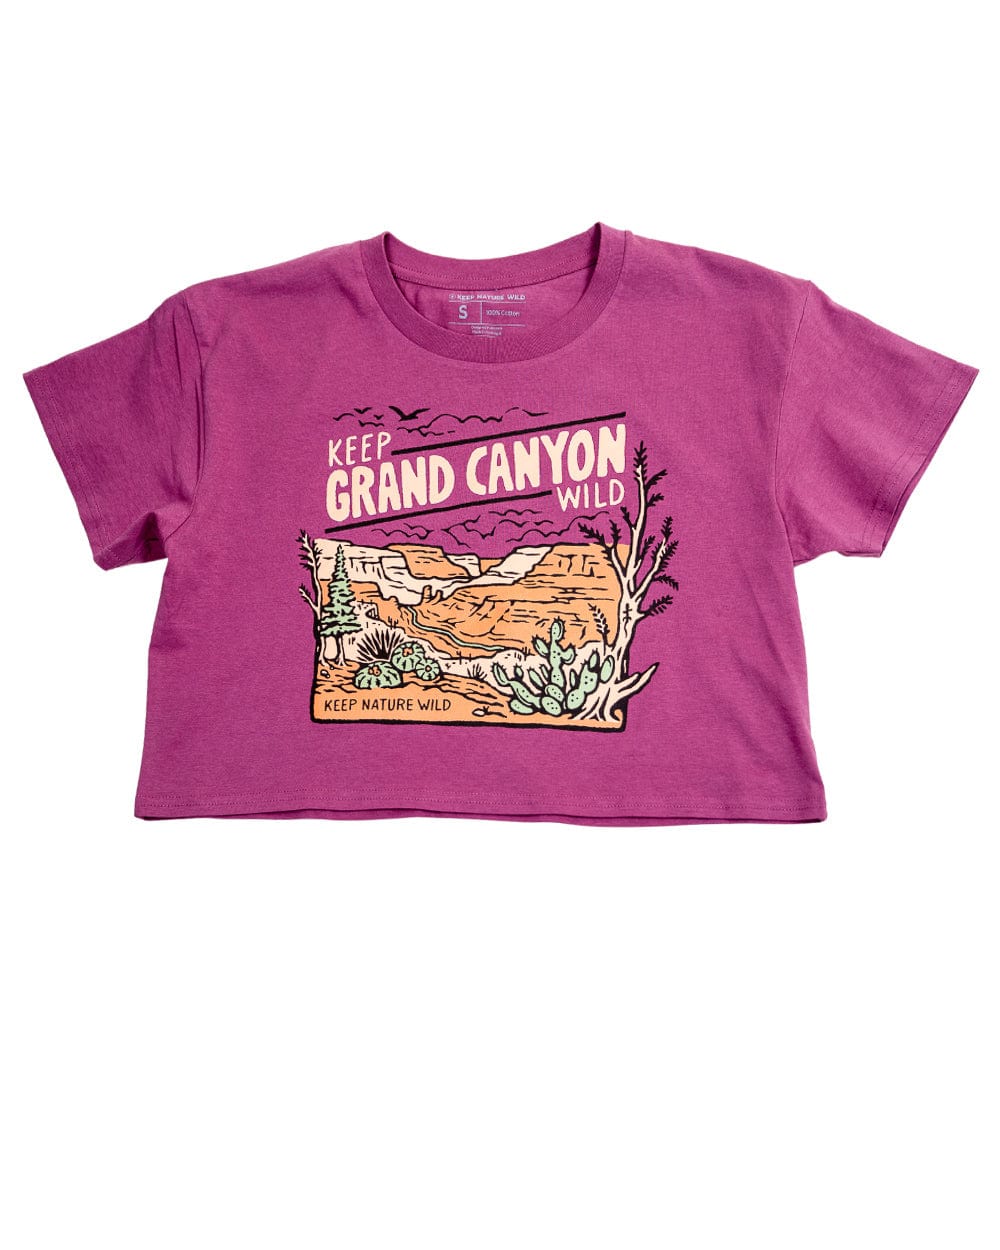 Keep Nature Wild Tee Keep Grand Canyon Wild Women's Crop Top | Berry